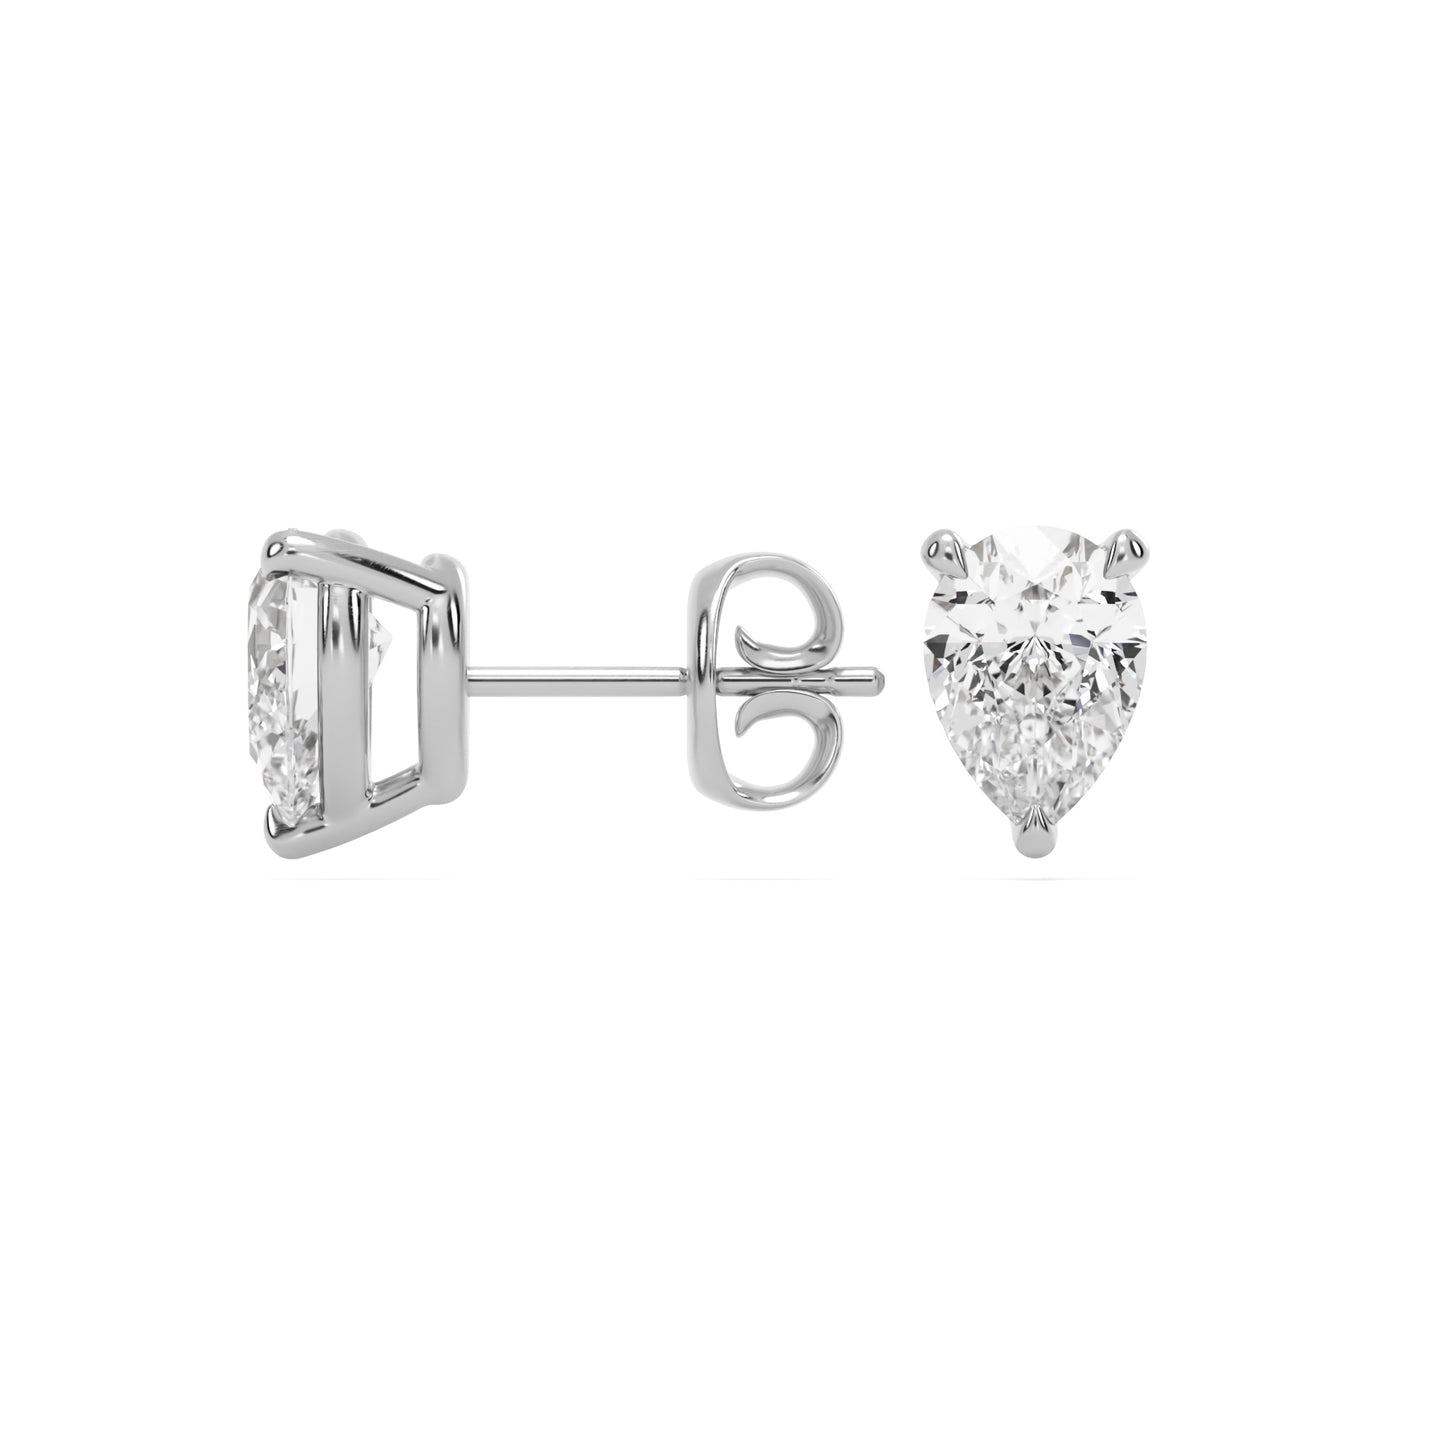 pear diamond stud earrings 14k white gold